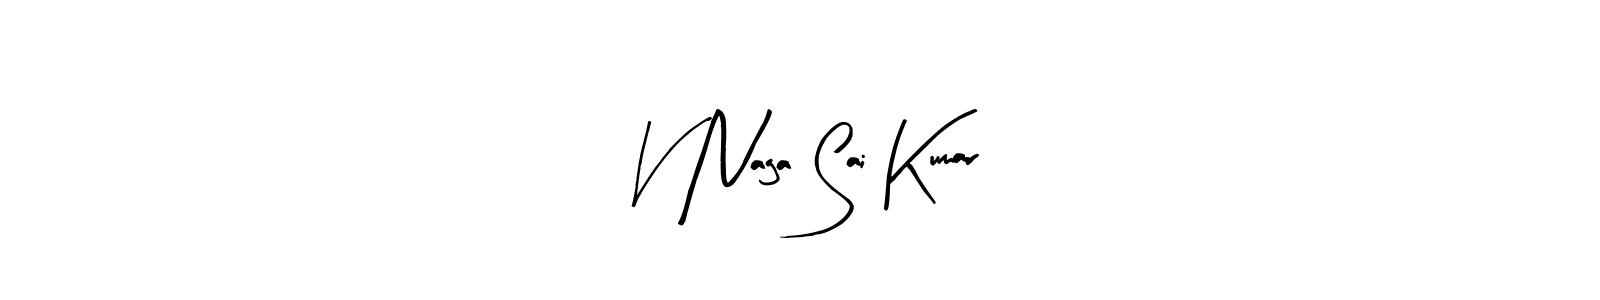 How to make V Naga Sai Kumar signature? Arty Signature is a professional autograph style. Create handwritten signature for V Naga Sai Kumar name. V Naga Sai Kumar signature style 8 images and pictures png